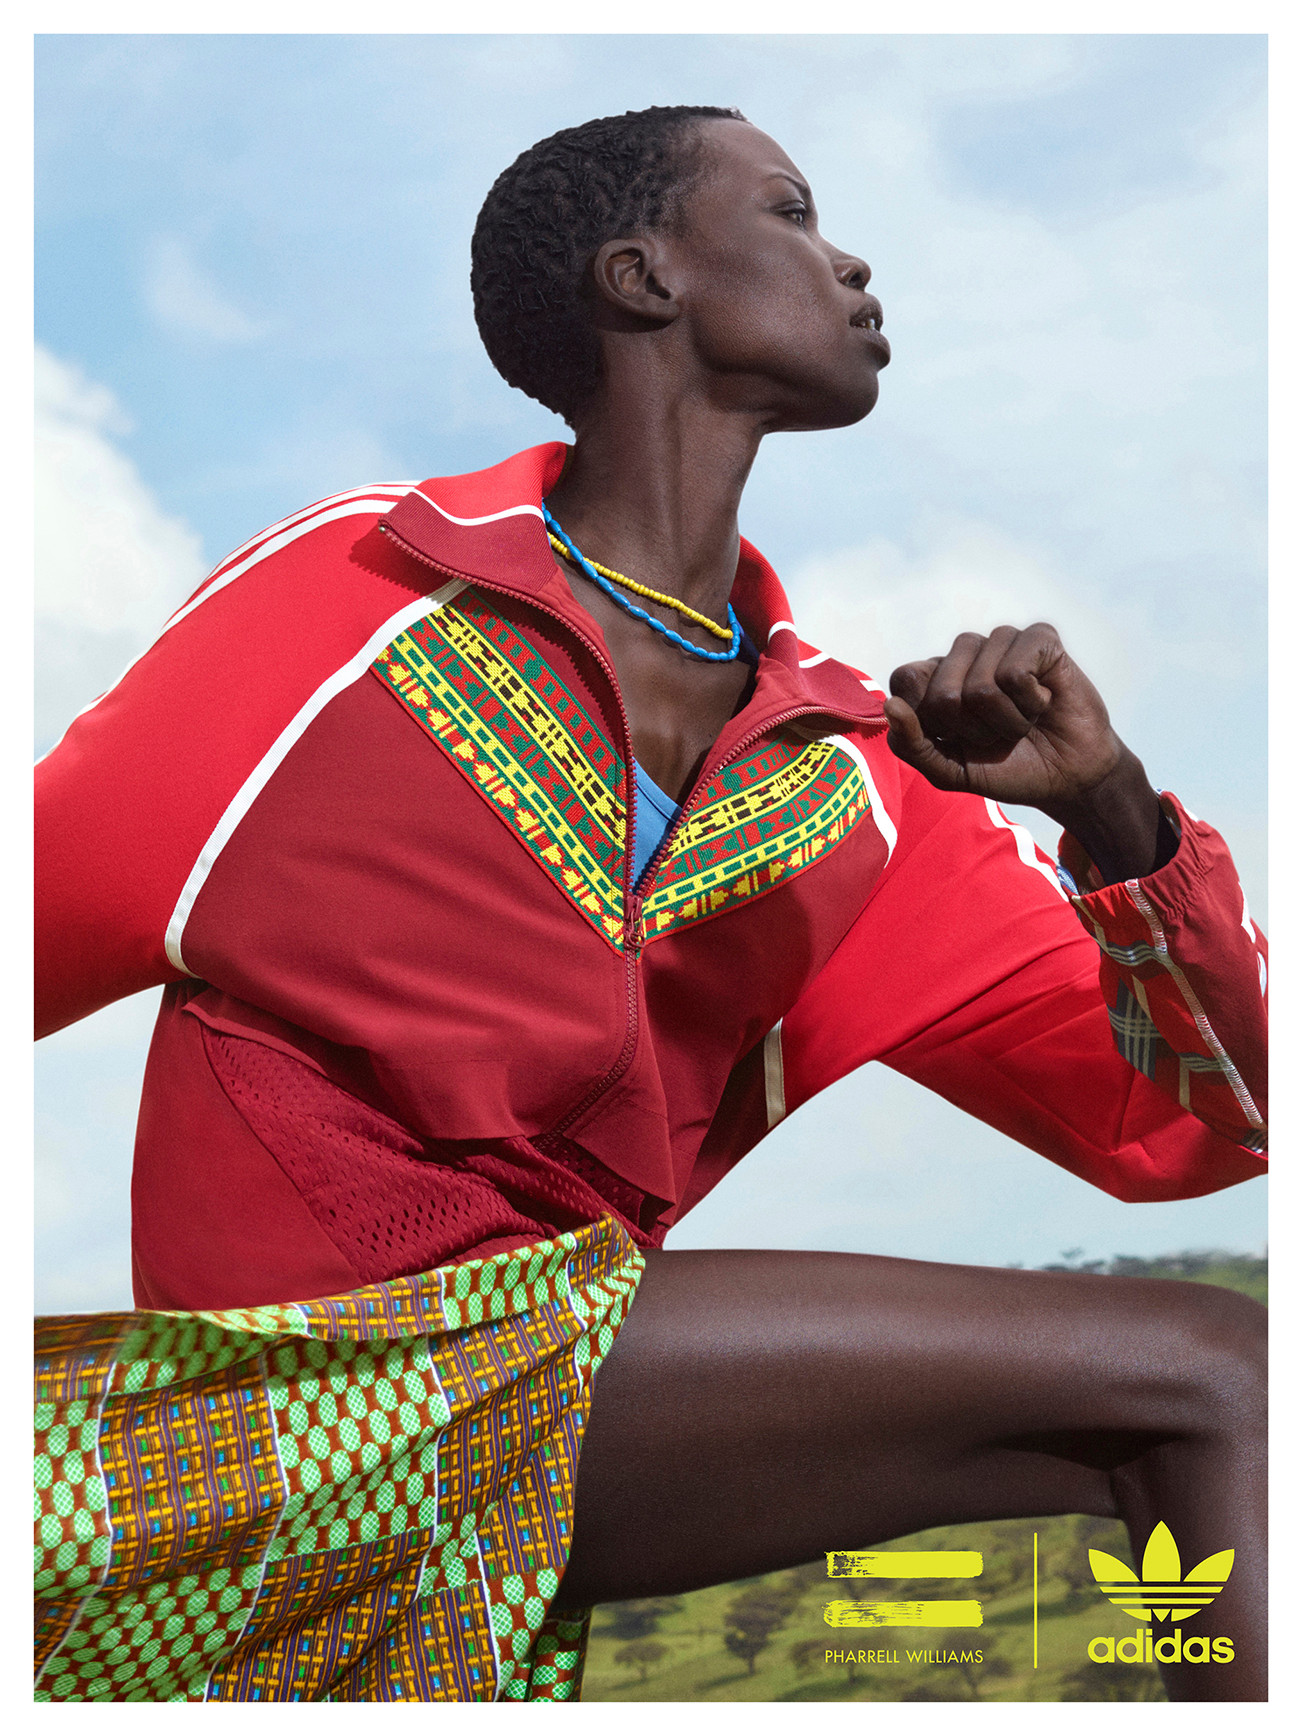 Pharrell \u0026 adidas Originals Head to East Africa to Unveil the “SOLARHU” Pack